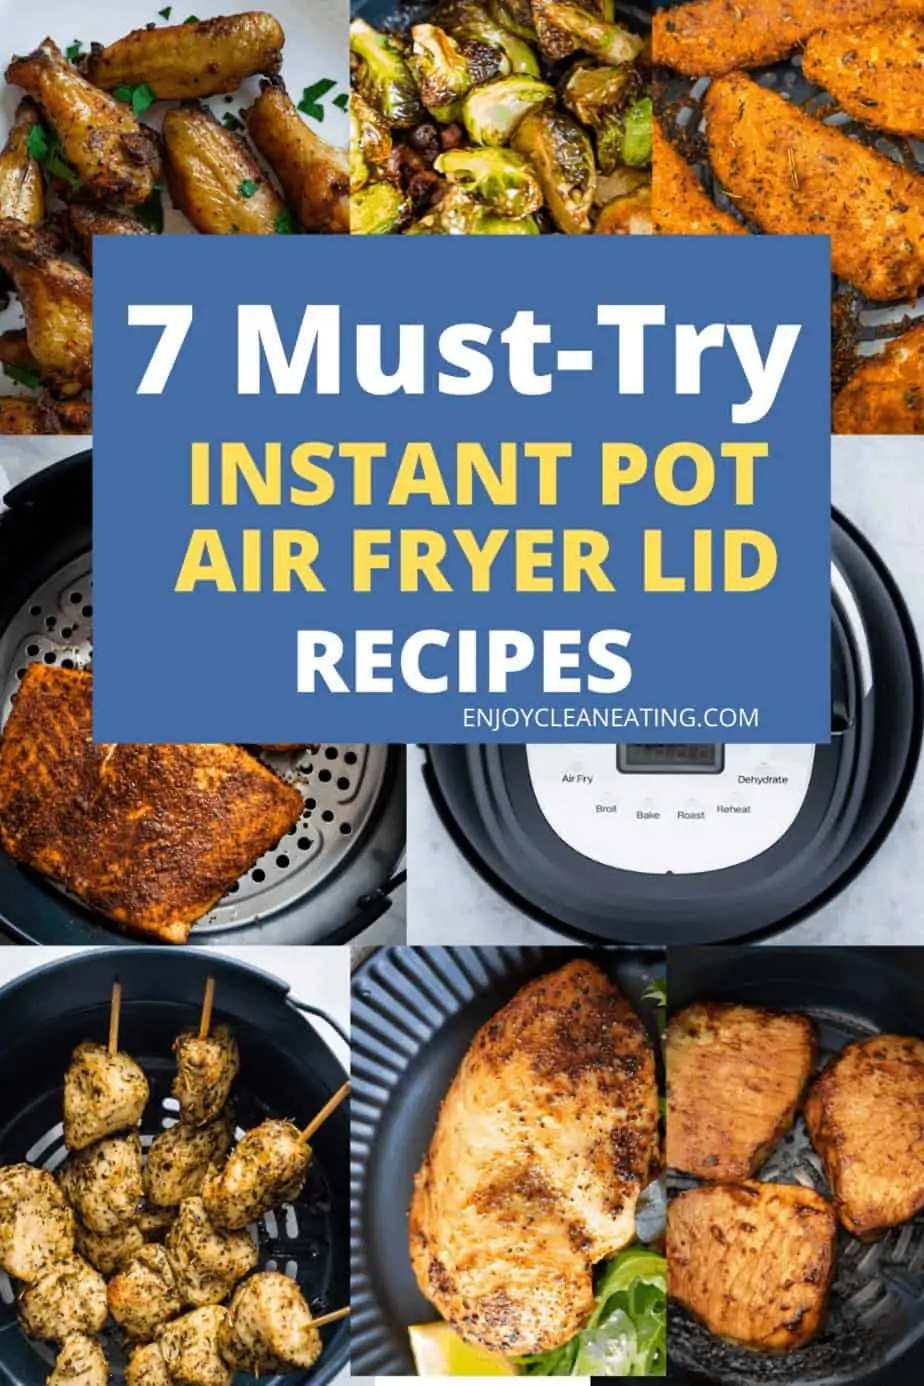 7 must try instant pot air fryer lid